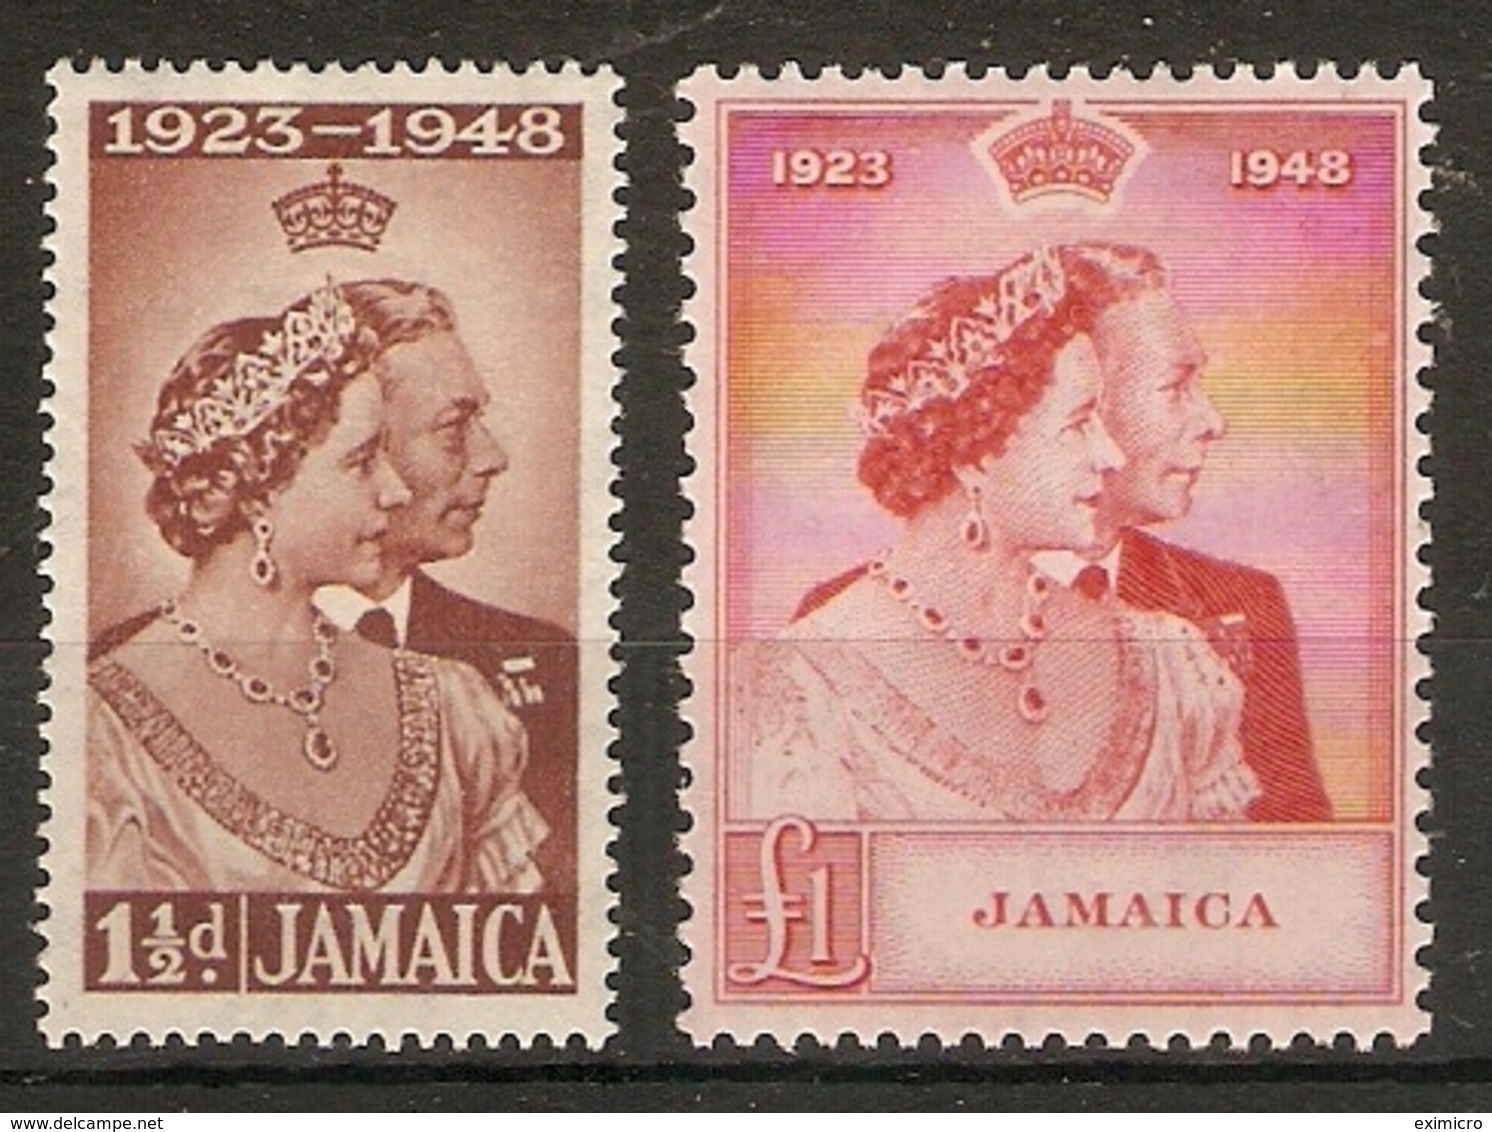 JAMAICA 1948 SILVER WEDDING SET LIGHTLY MOUNTED MINT Cat £28+ - Jamaica (...-1961)